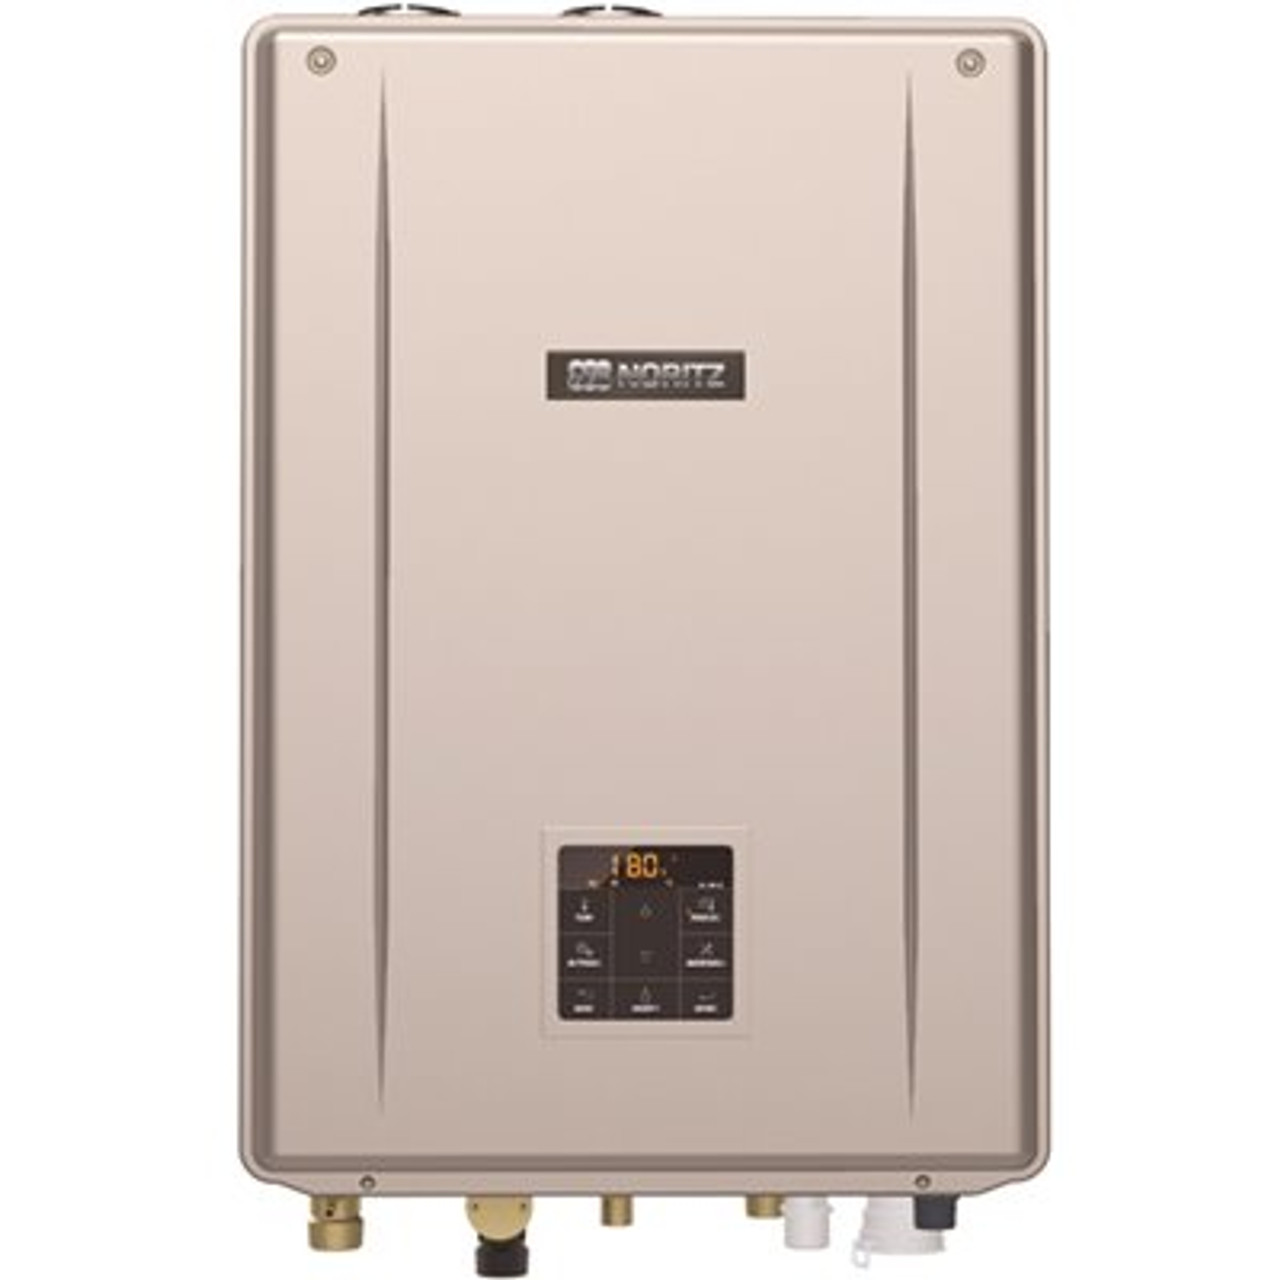 NORITZ Indoor Residential Condensing Natural Gas Combination Boiler with 199,900 BTU/H Input Modulating